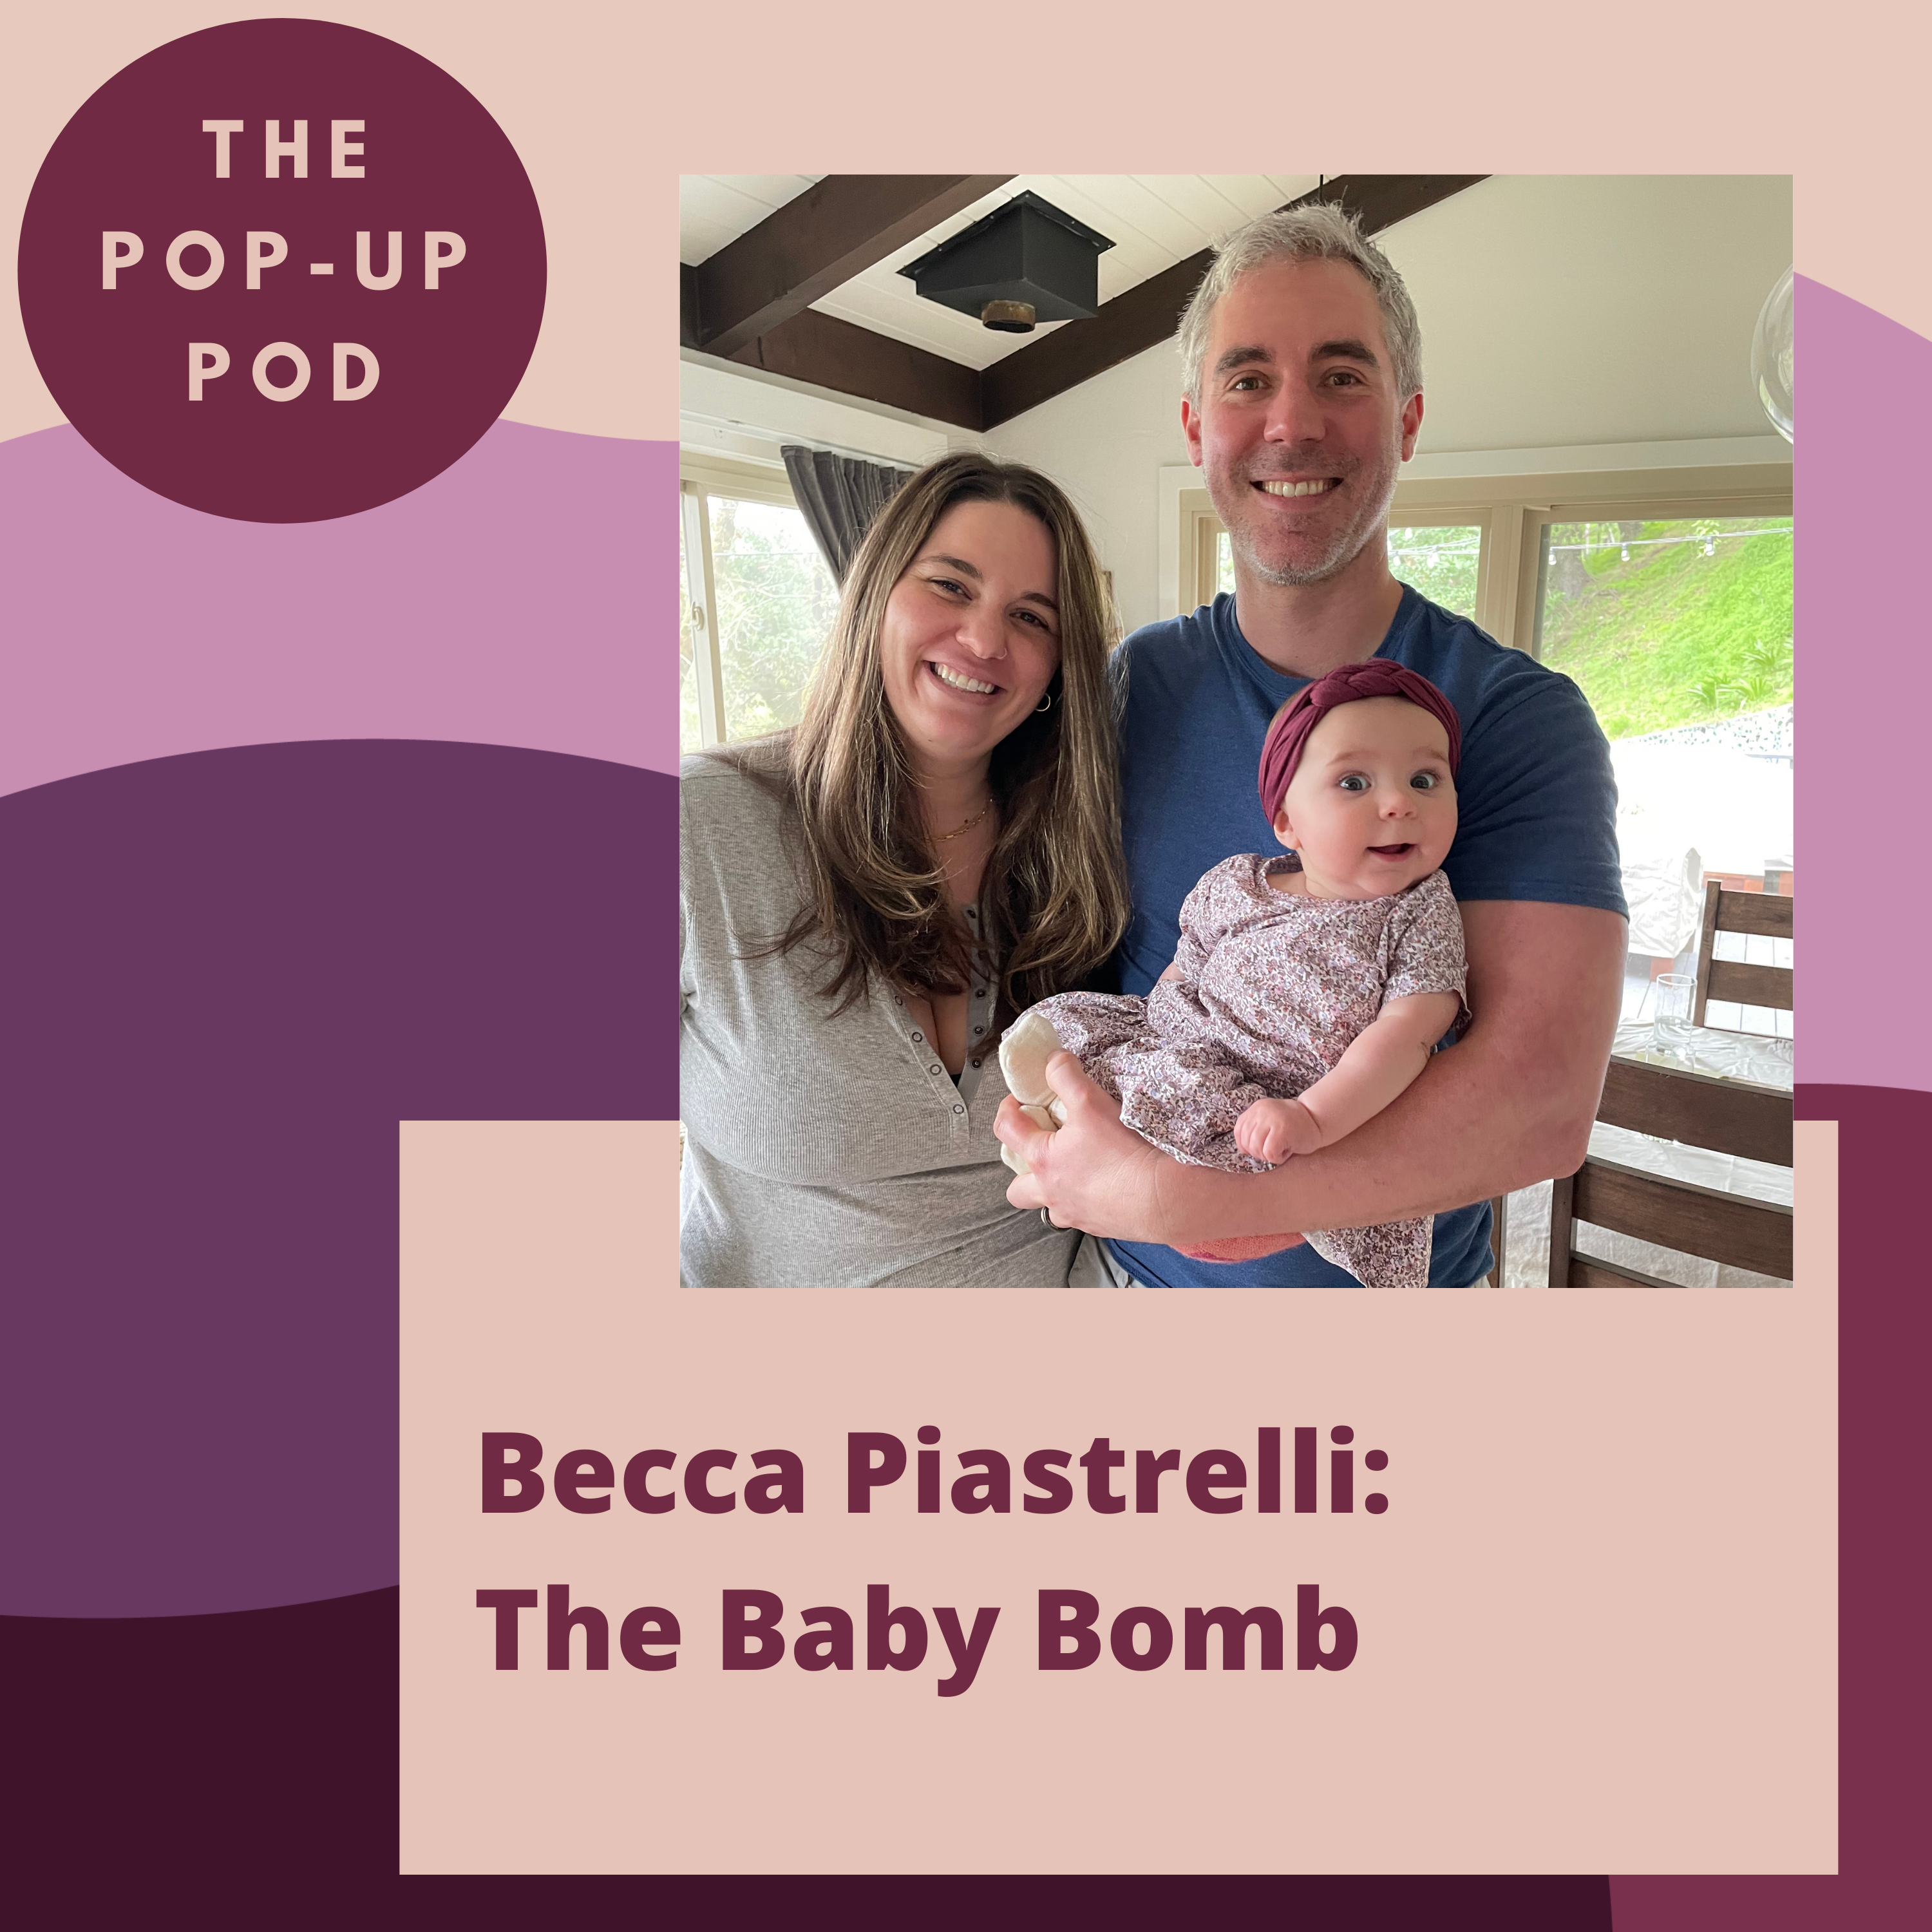 Becca Piastrelli: The Baby Bomb